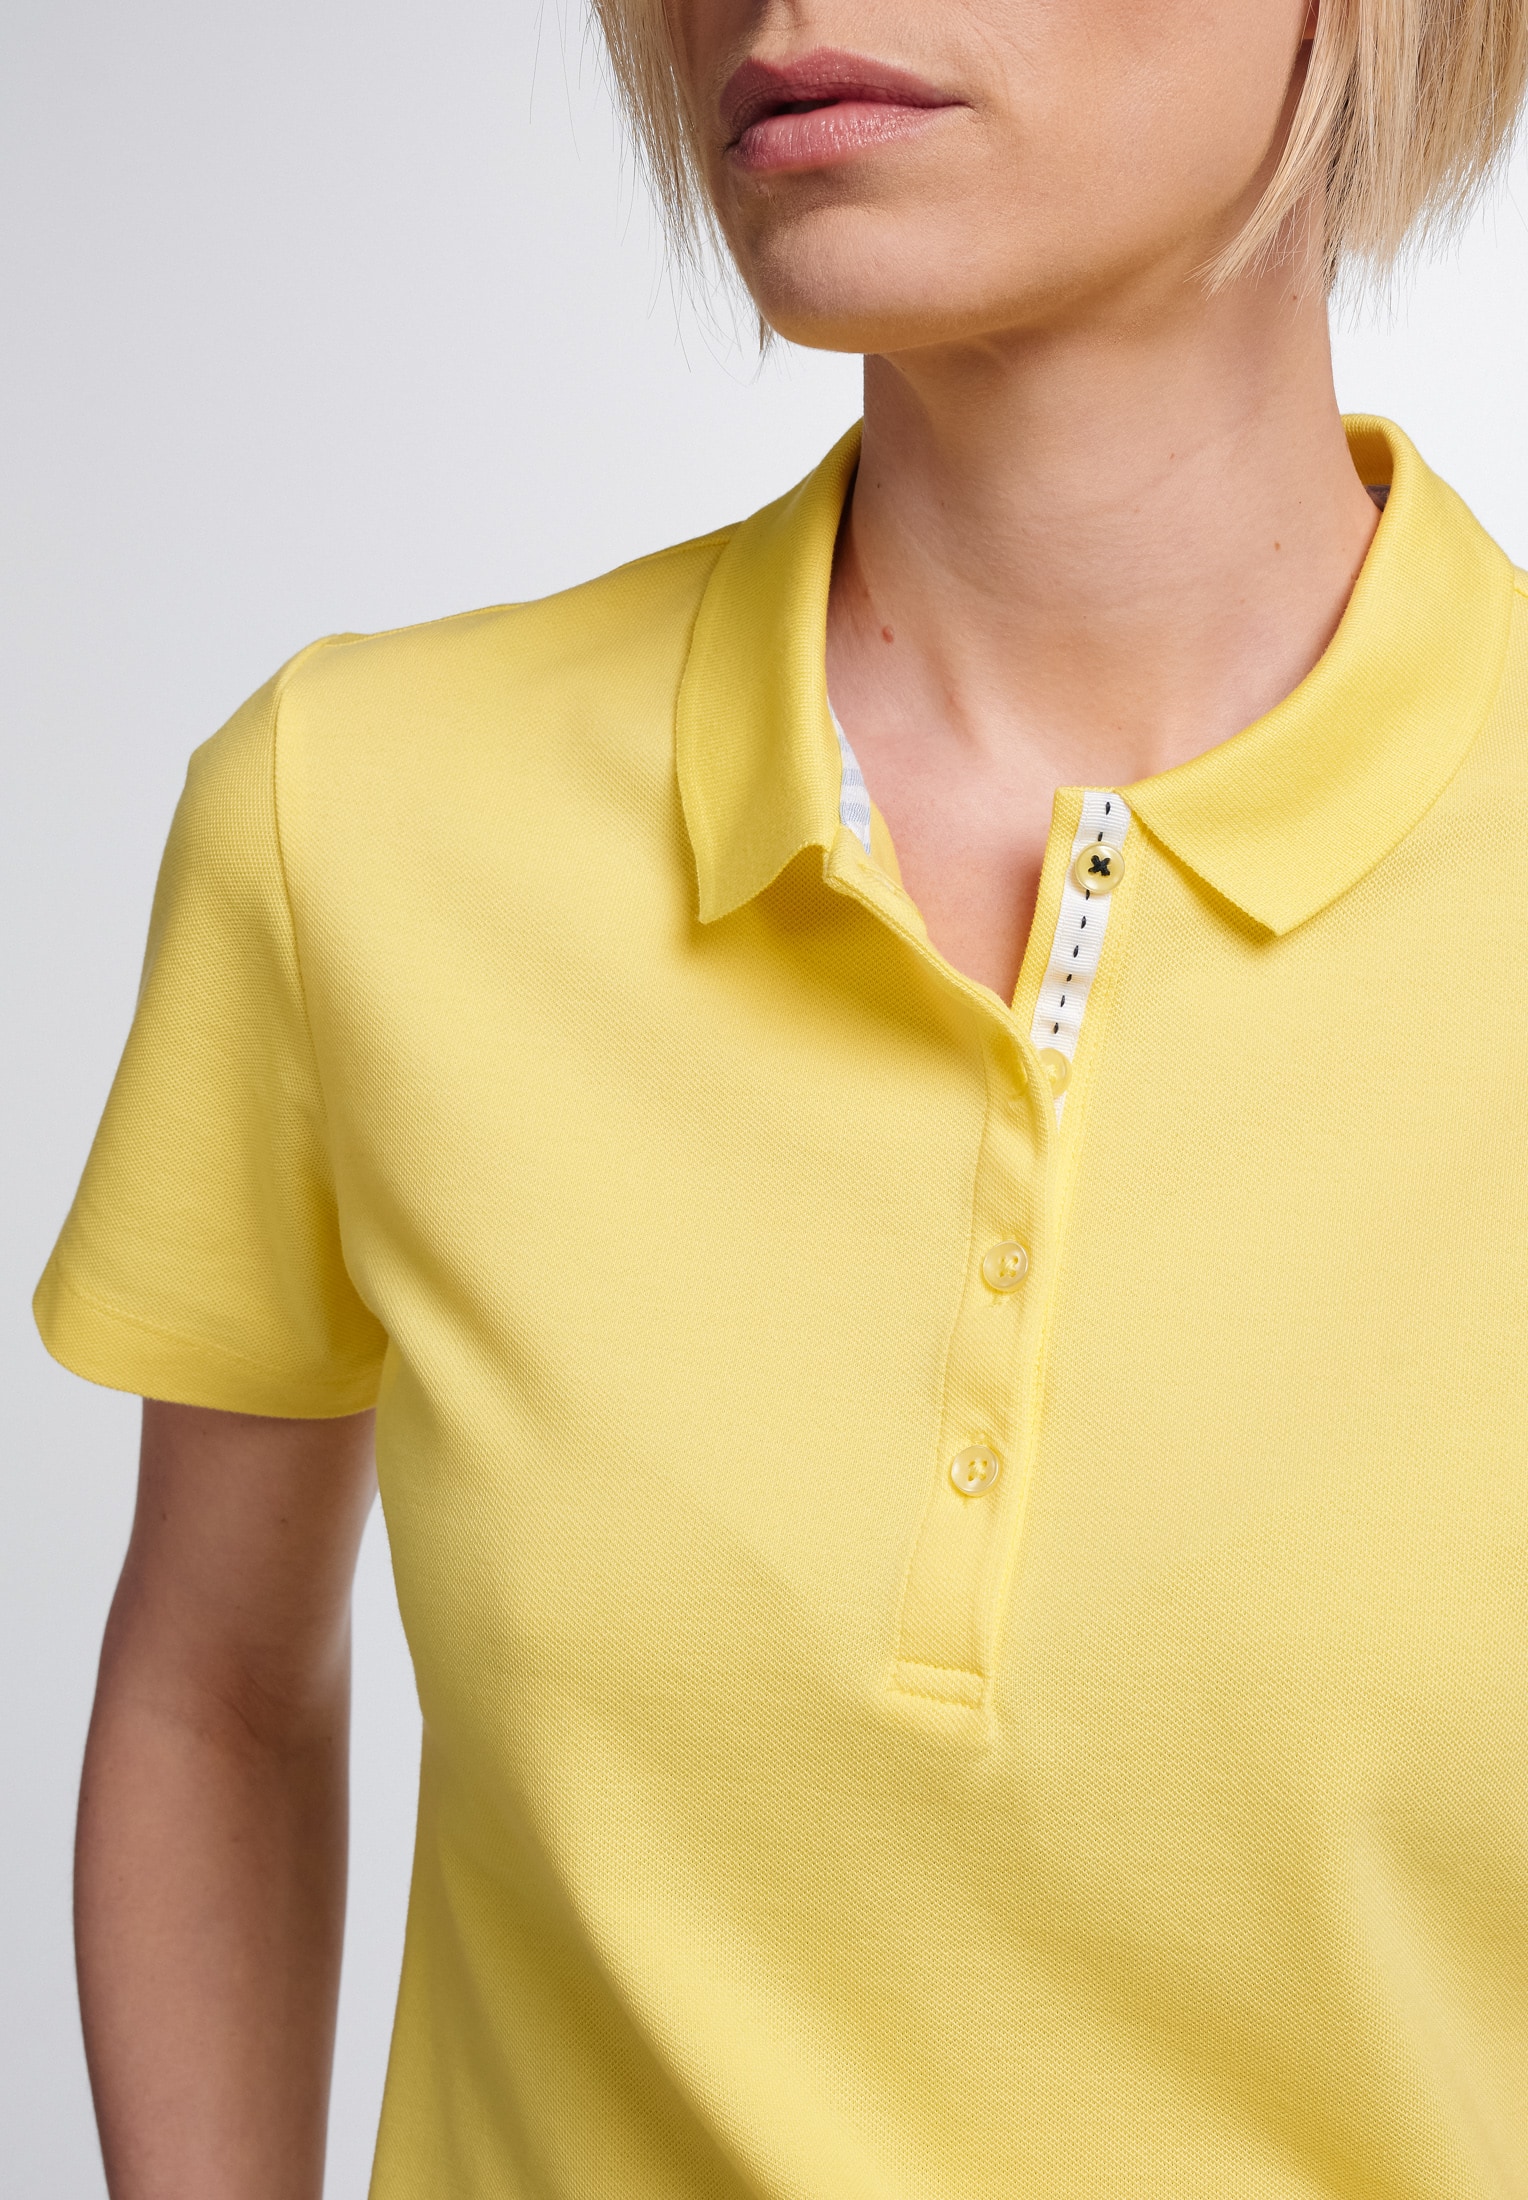 | | | | in 2SP00006-07-01-7XL-1/2 Poloshirt gelb gelb Kurzarm 7XL unifarben